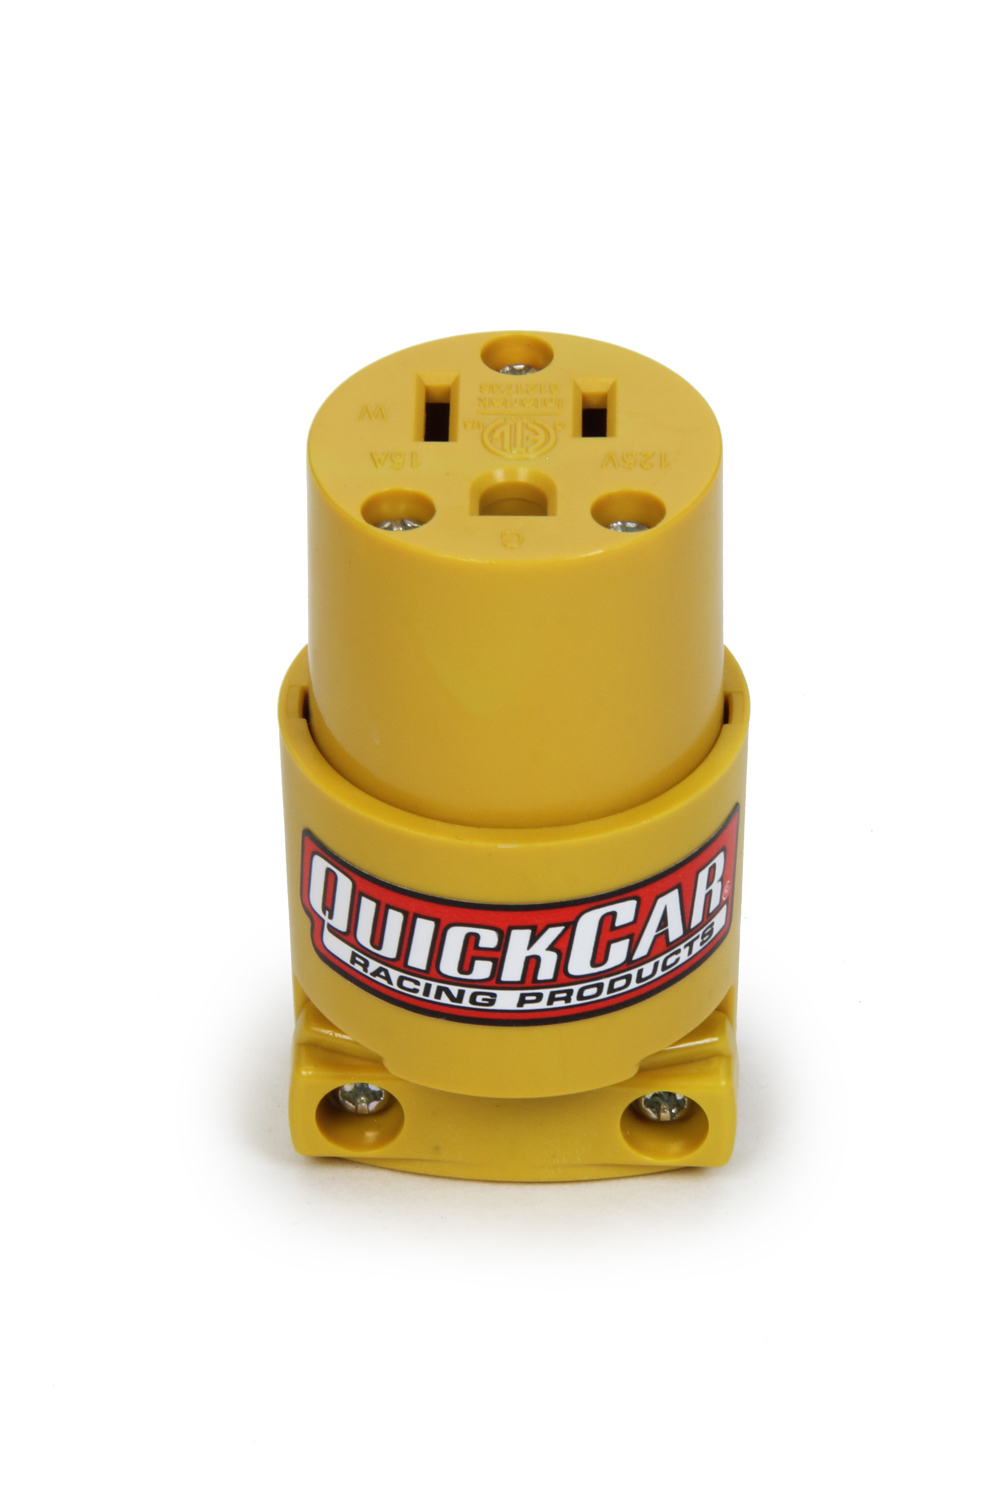 QuickCar 57-720 - Accessory Plug-In, 110V, 3-Prong Female Socket, Each